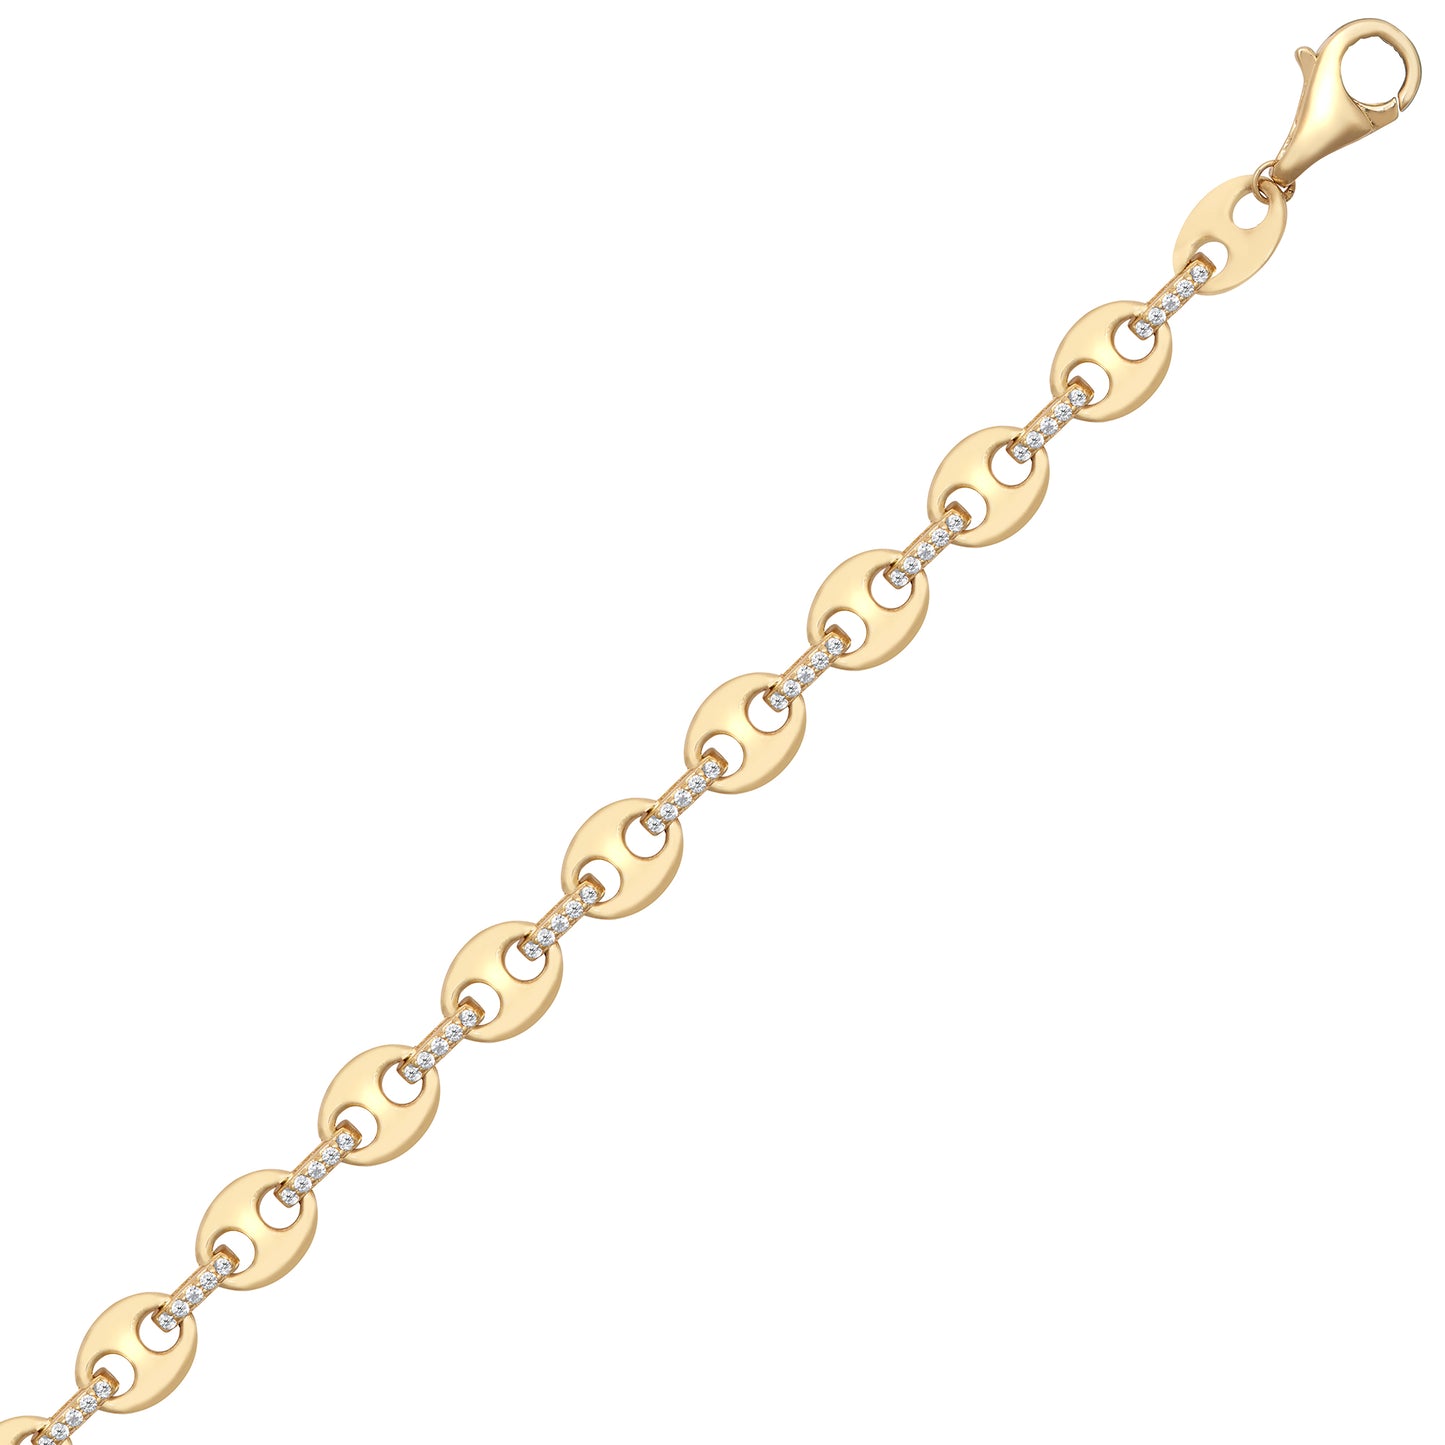 9ct Gold  CZ Coffee Bean Anchor 6mm Chain Link Bracelet 7.5inch - JBB403